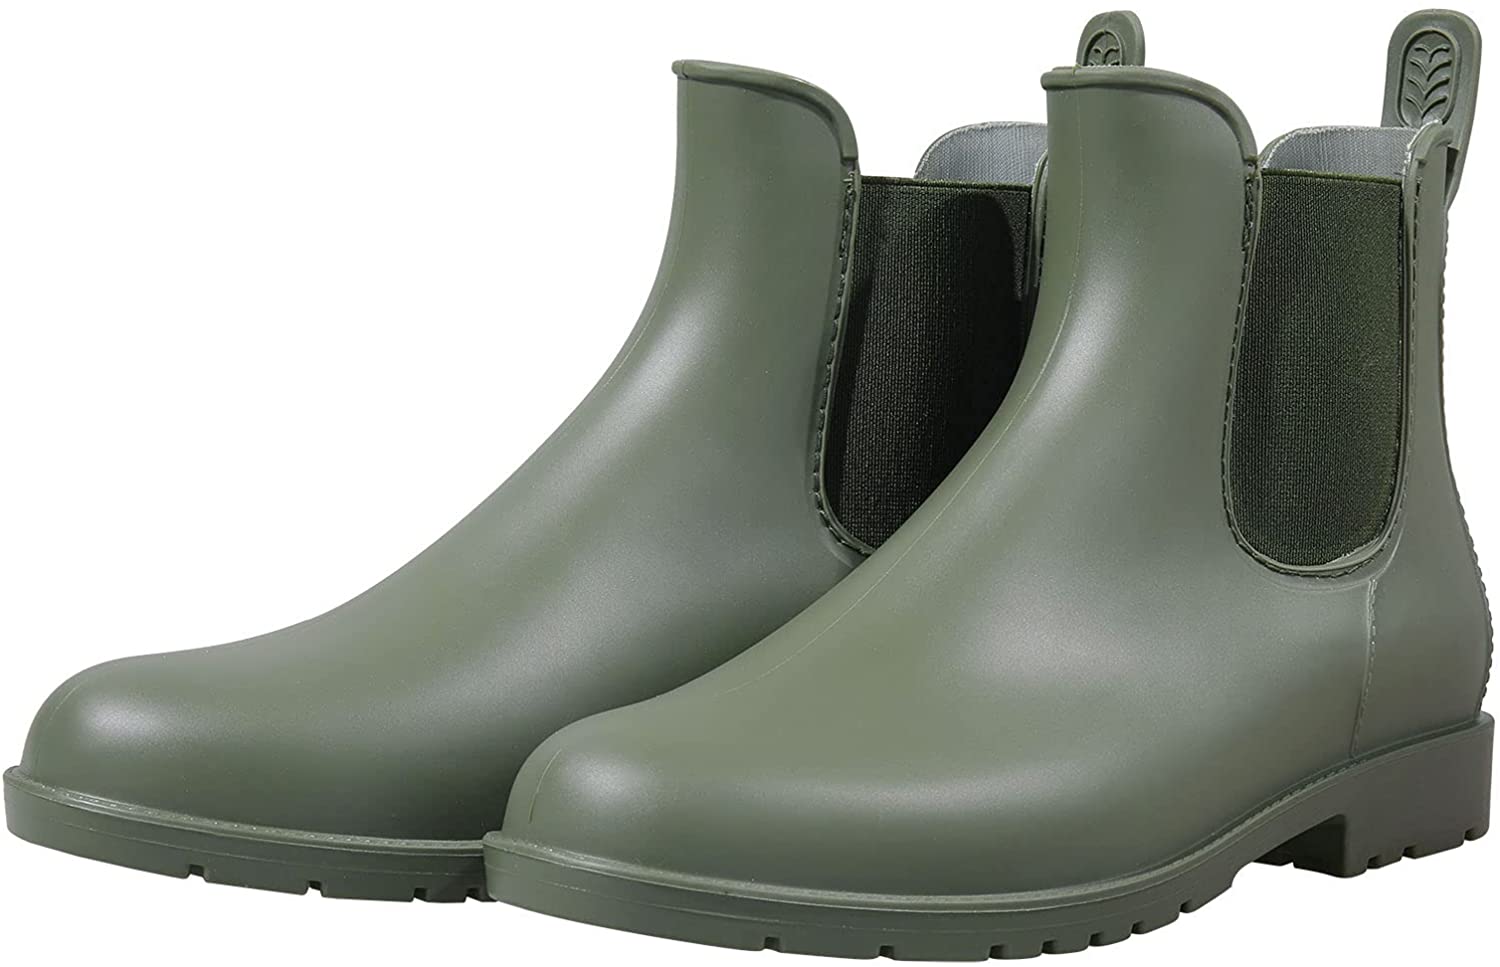 Colorxy Women's Ankle Rain Boots Waterproof Chelsea Booties Short Rain Shoes for Women 